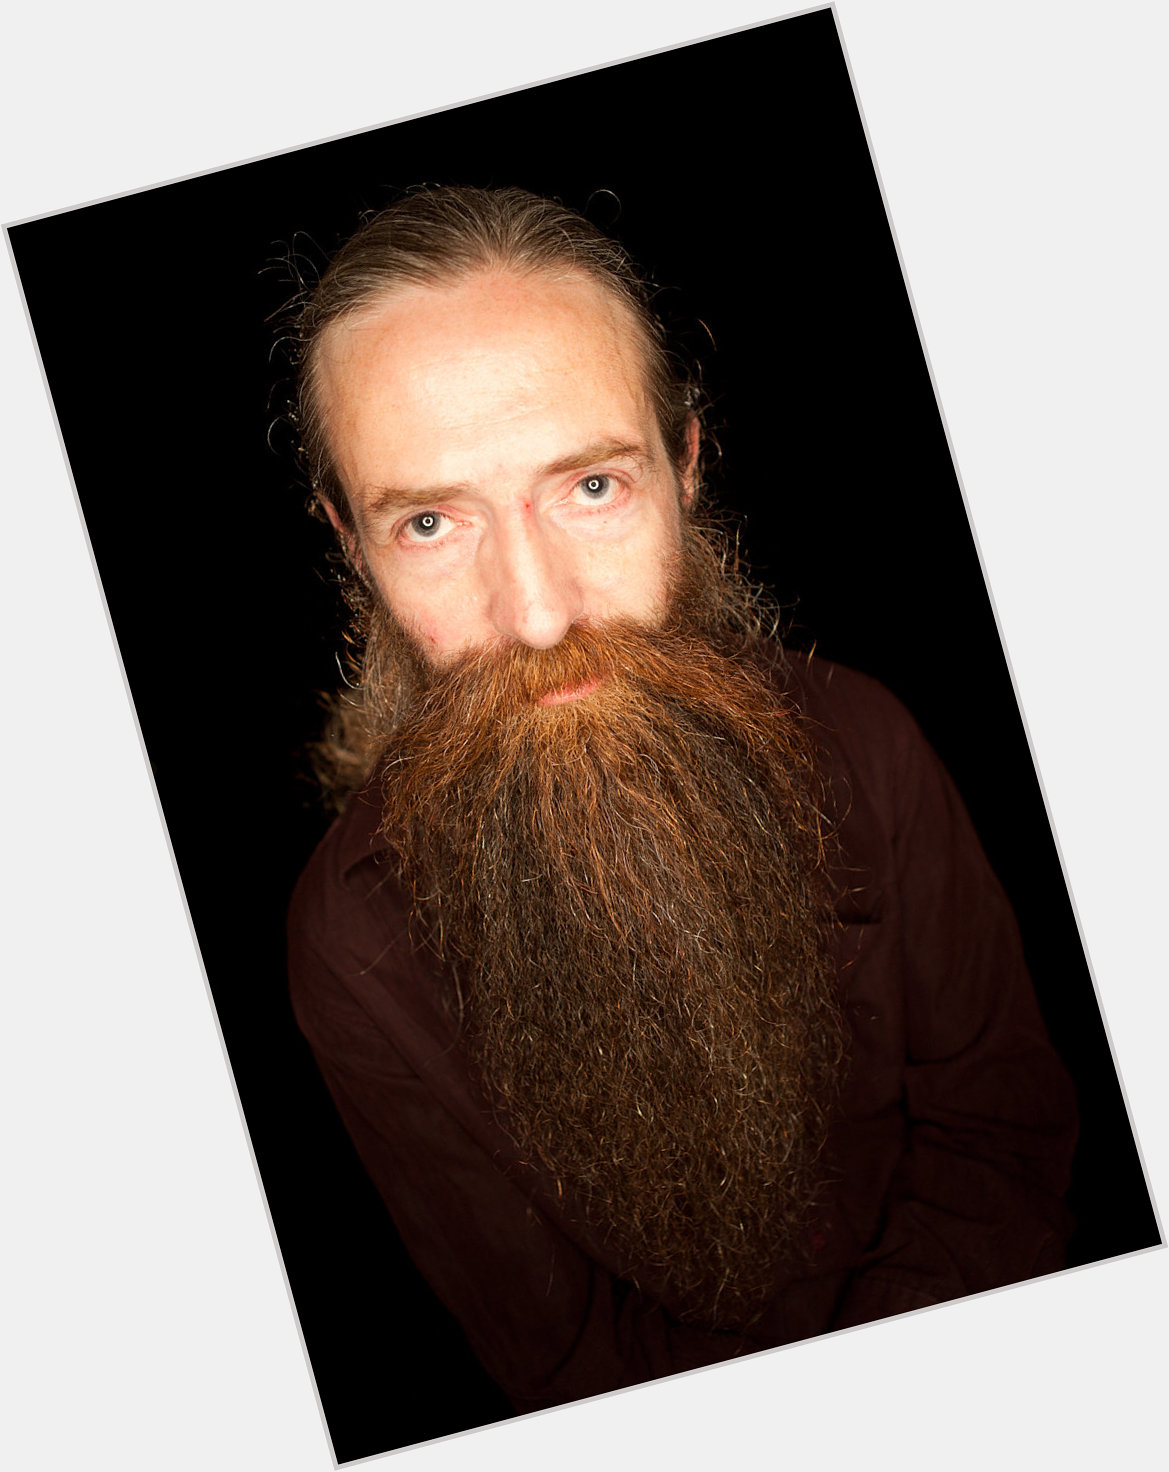 Aubrey De Grey full body 2